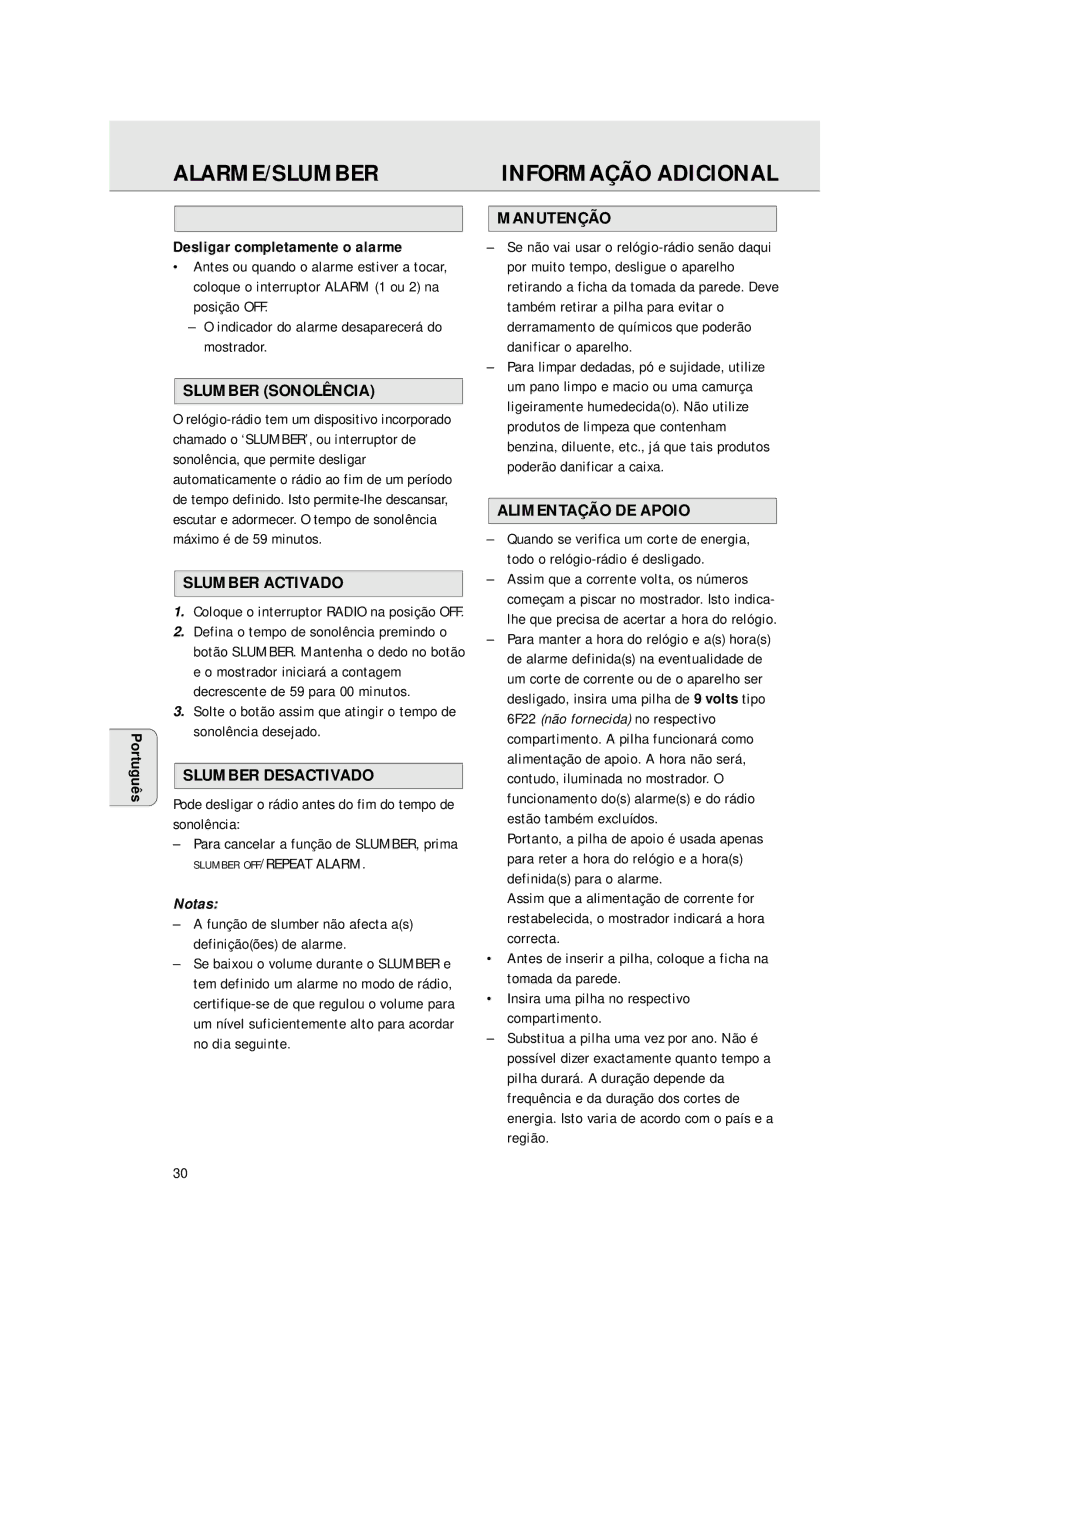 Philips AJ 3380 manual Alarme/Slumber, Informação Adicional 